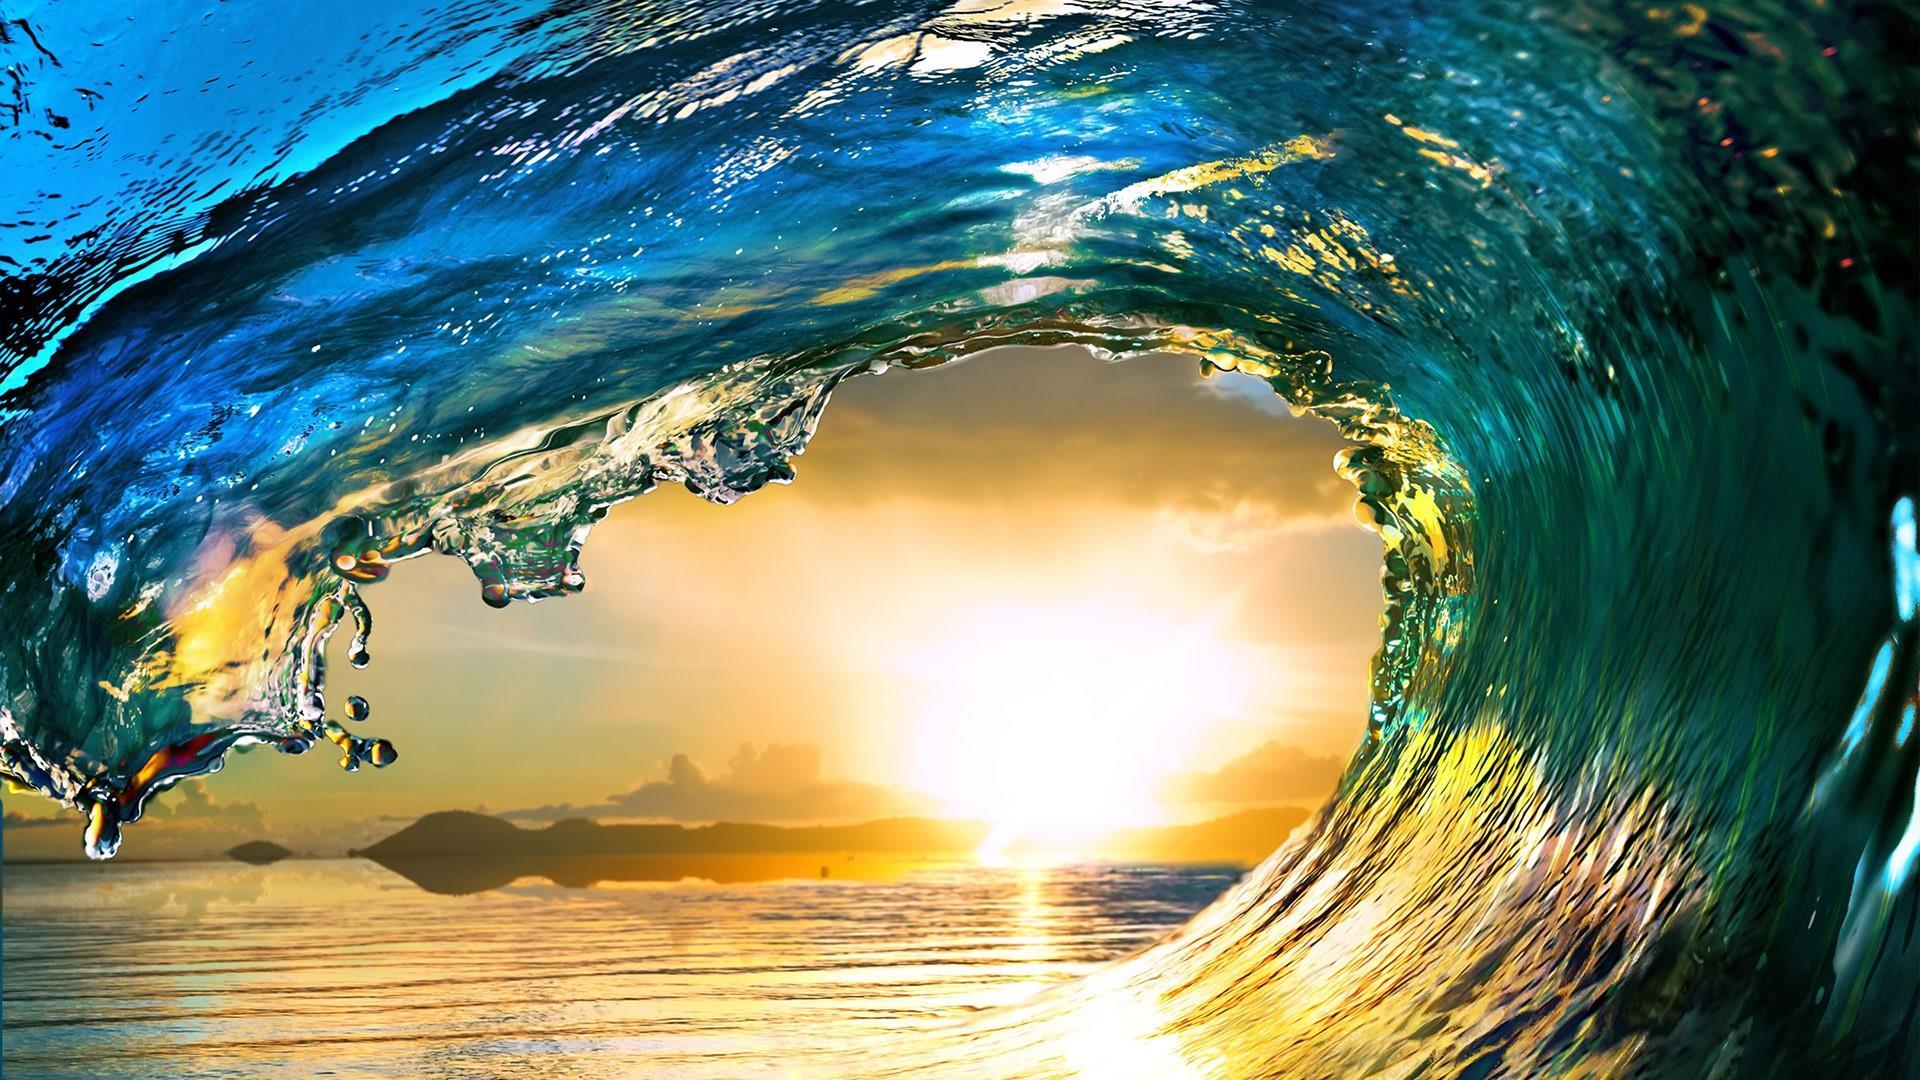 Ocean Waves Wallpapers Hd Wallpapers Pics